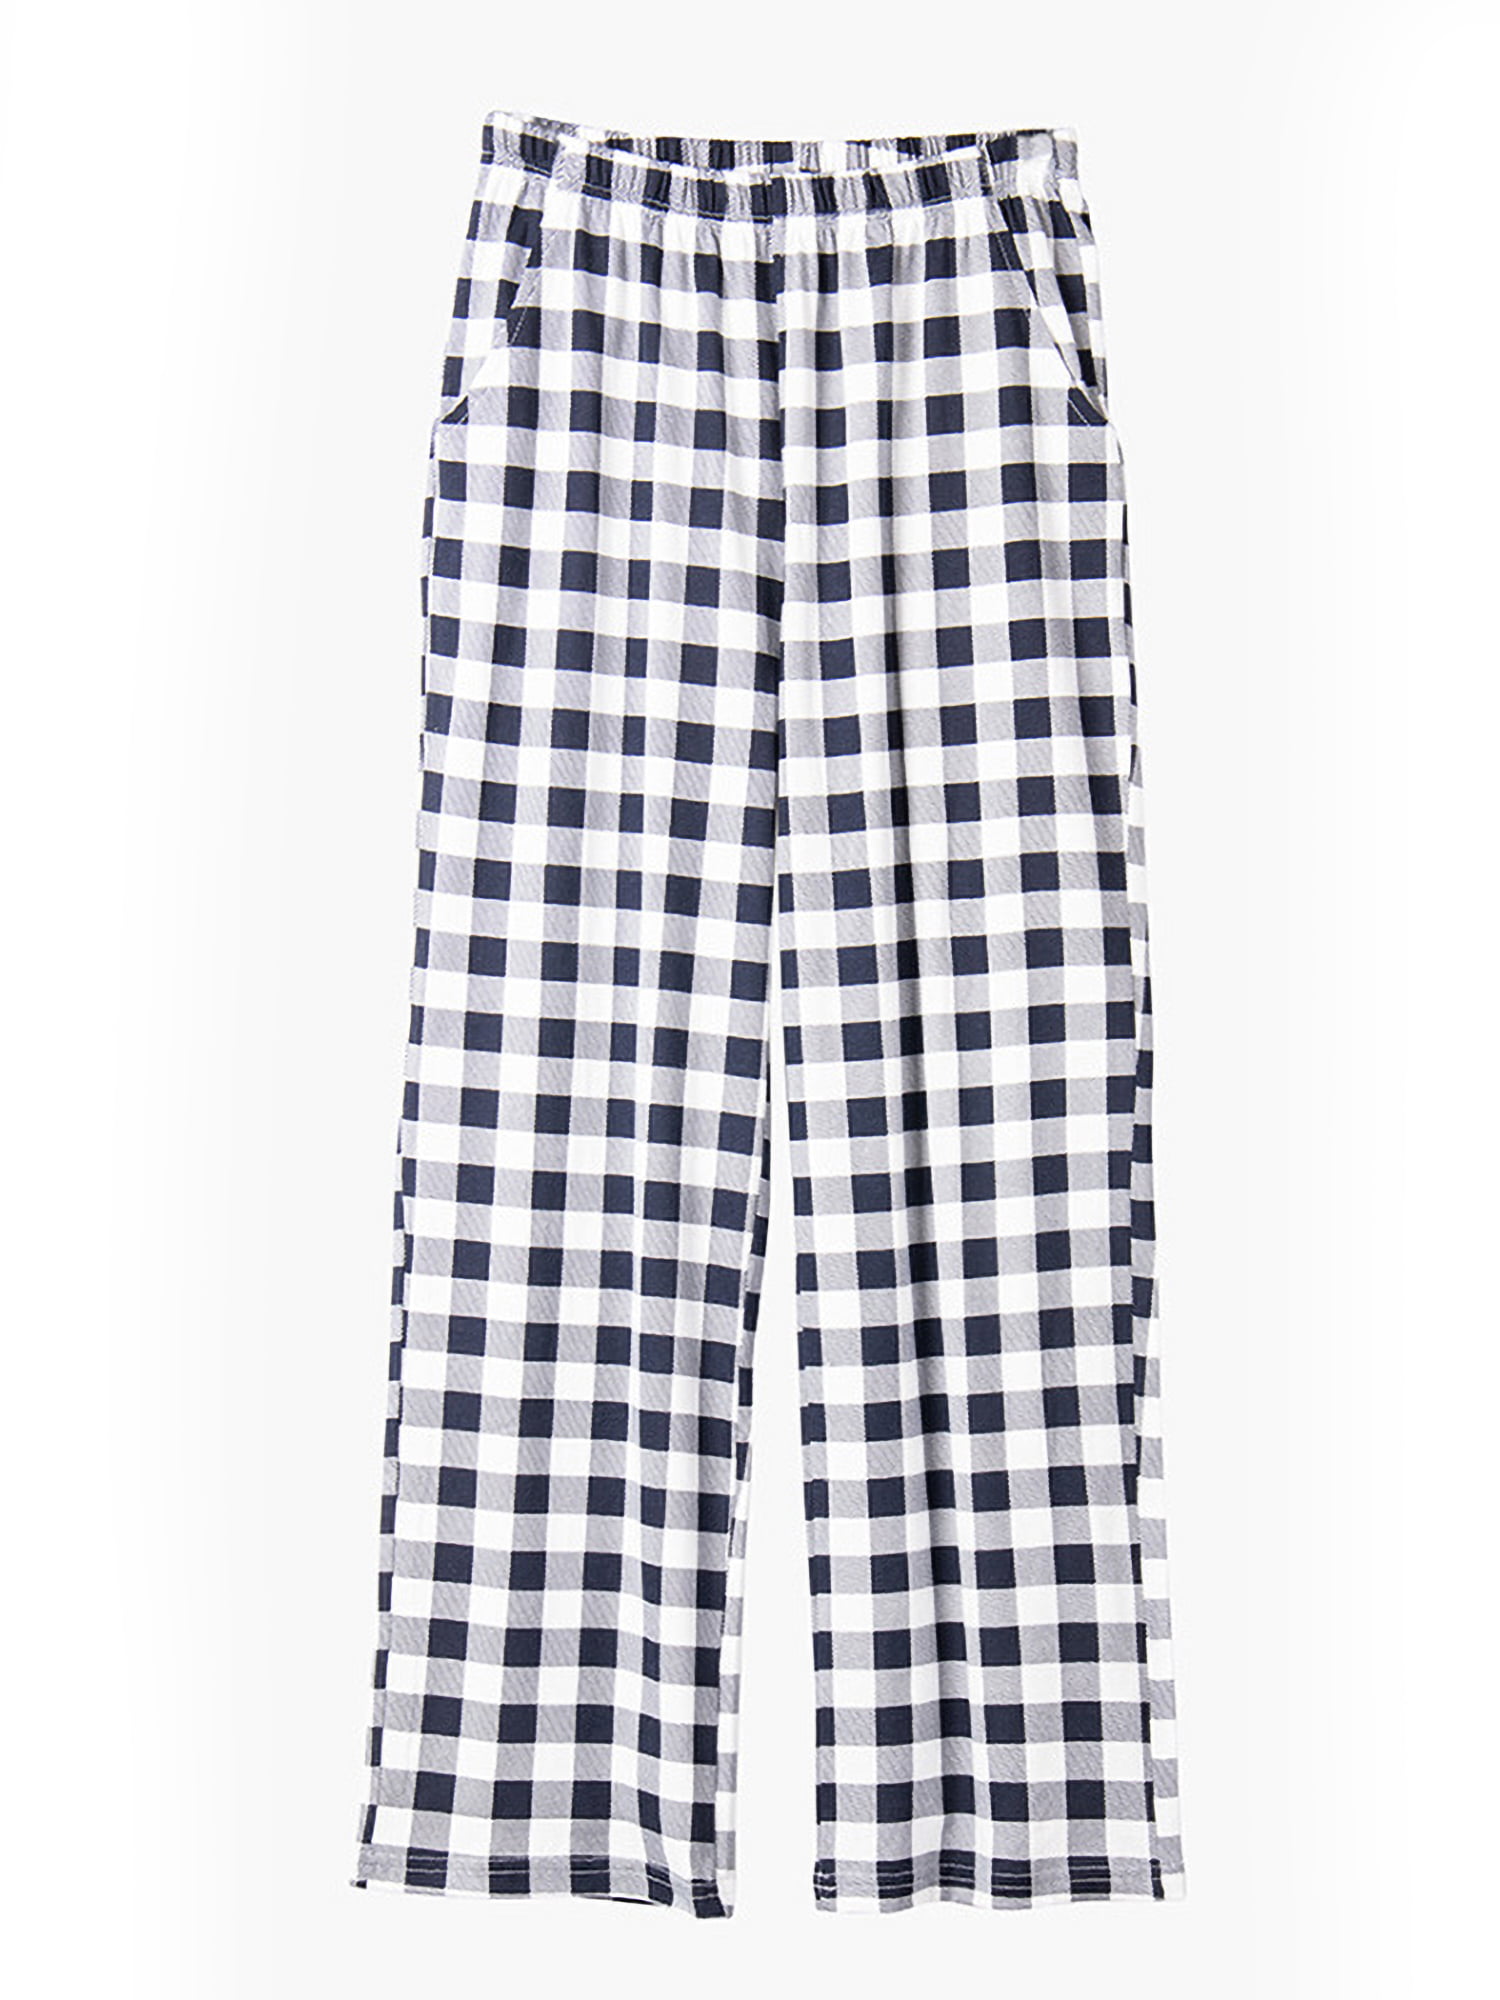 Women's Wide Leg Pajama Pants Casual Comfy Drawstring Sleep Trousers XS Fruit Avocado Pattern